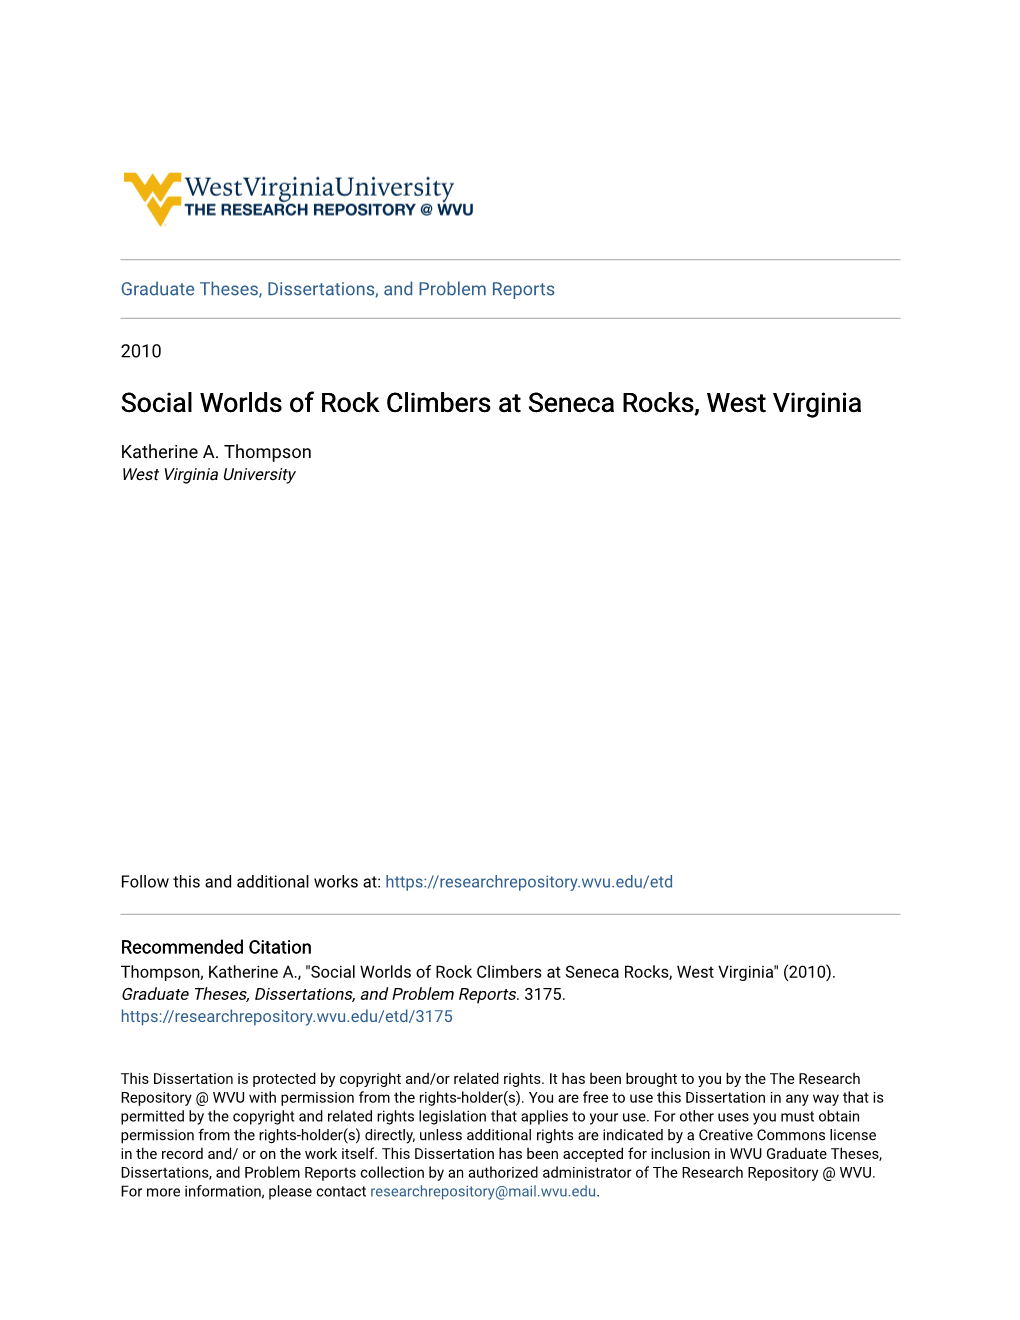 Social Worlds of Rock Climbers at Seneca Rocks, West Virginia